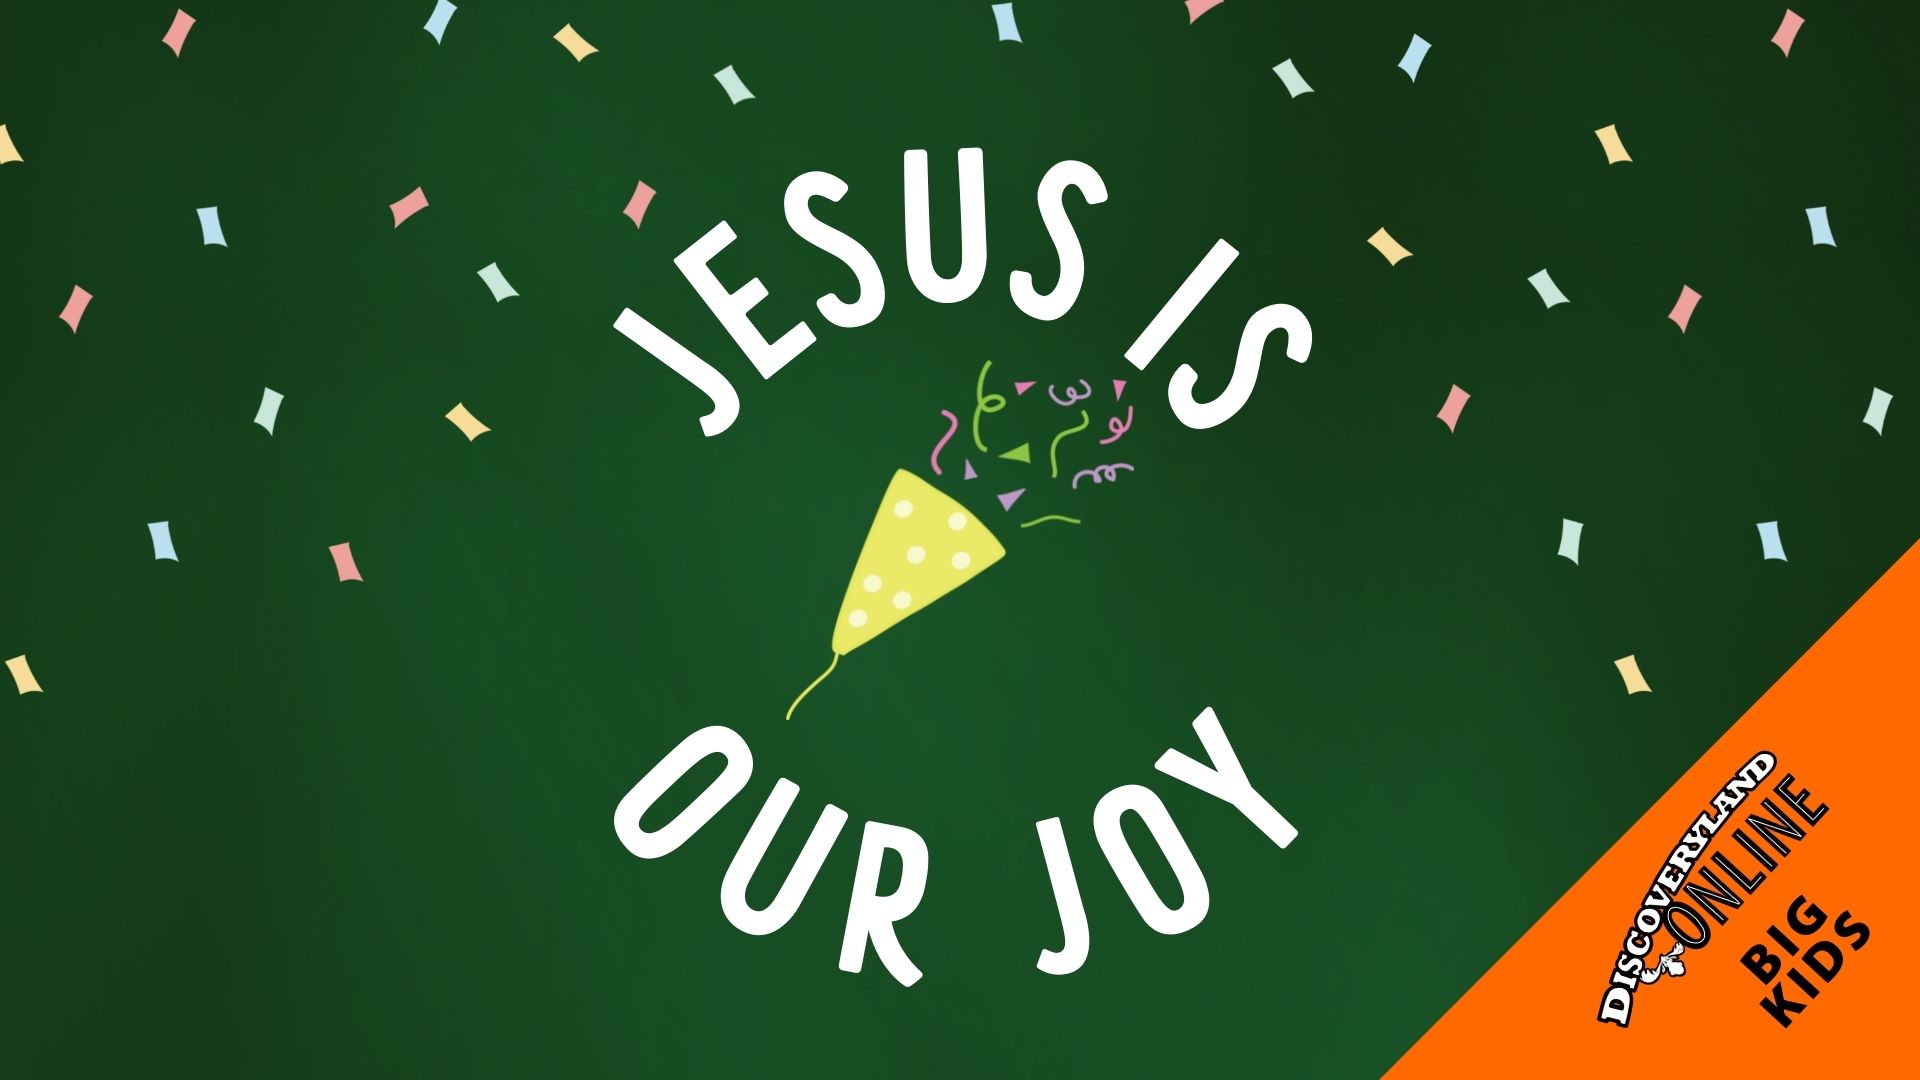 Jesus Is Our Joy